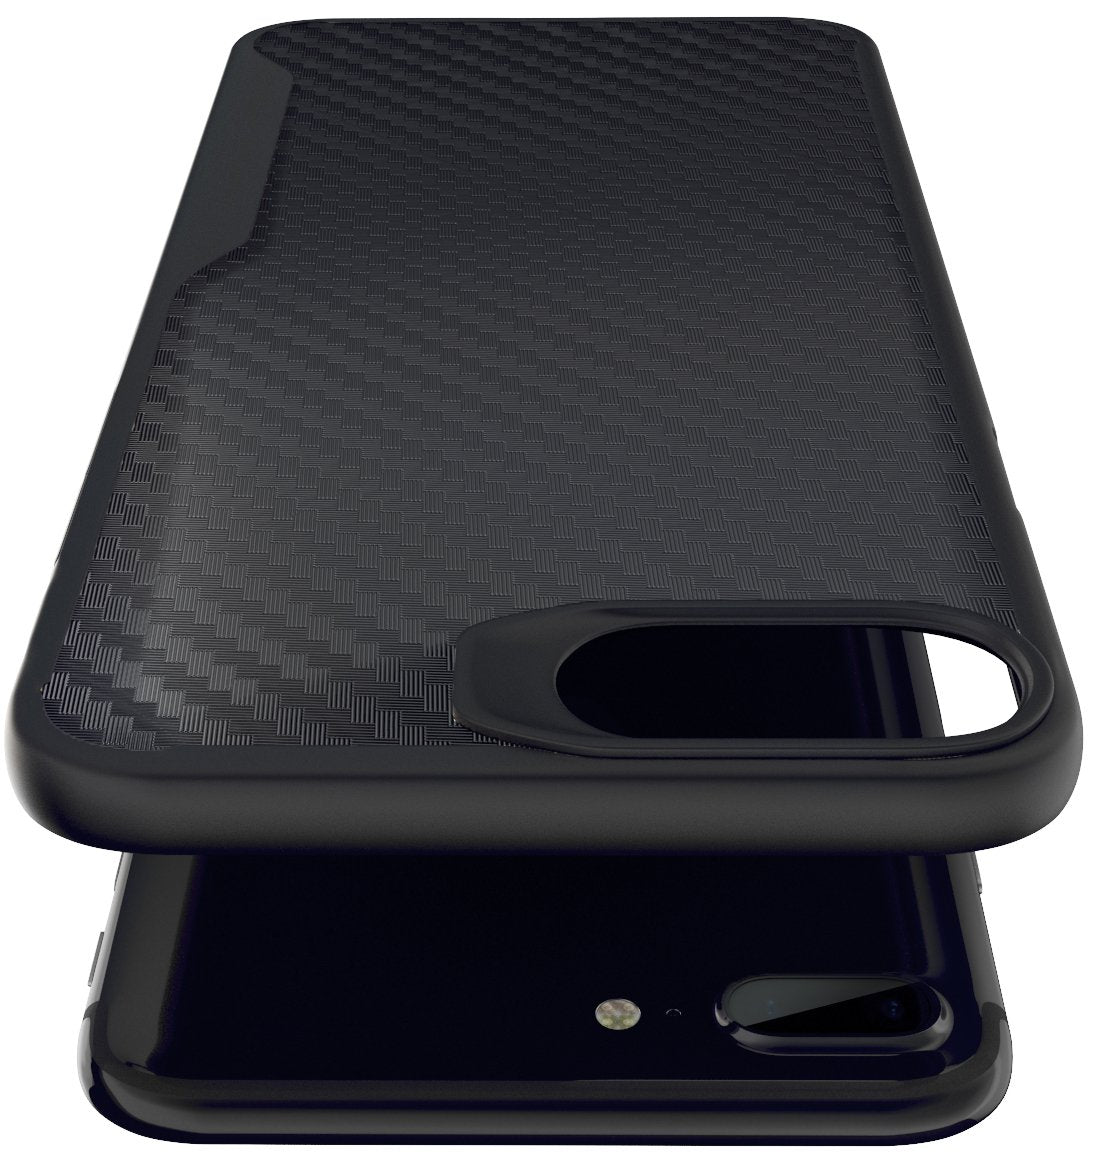 iPhone 7 Plus / iPhone 8 Plus Kitoo Carbon Fiber Pattern Case Black